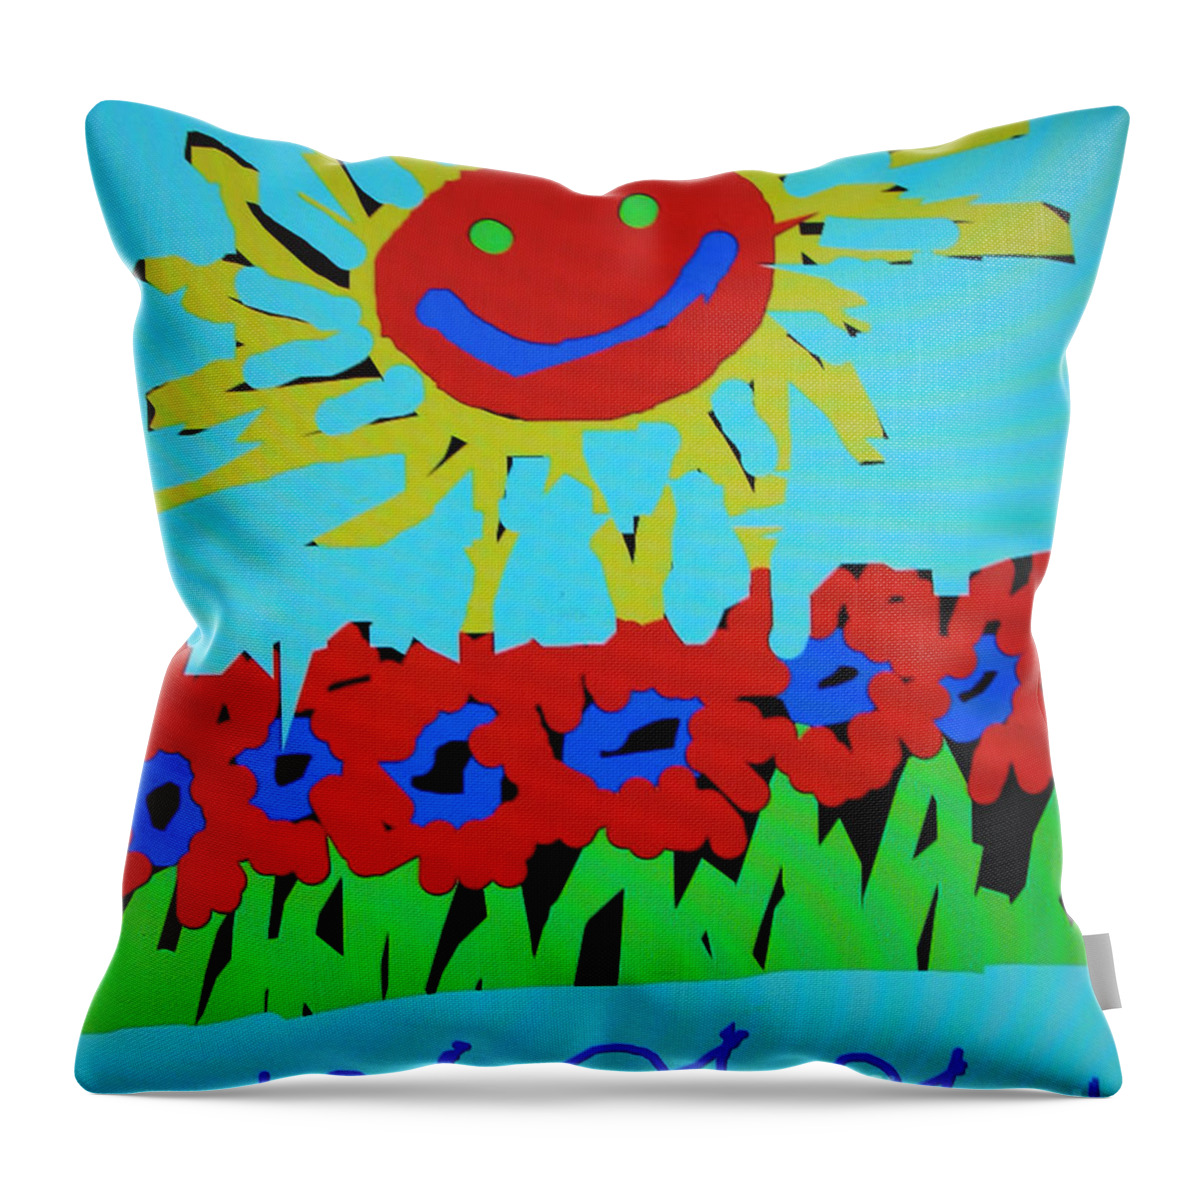 Sun Throw Pillow featuring the photograph Brians Art by Douglas Stucky